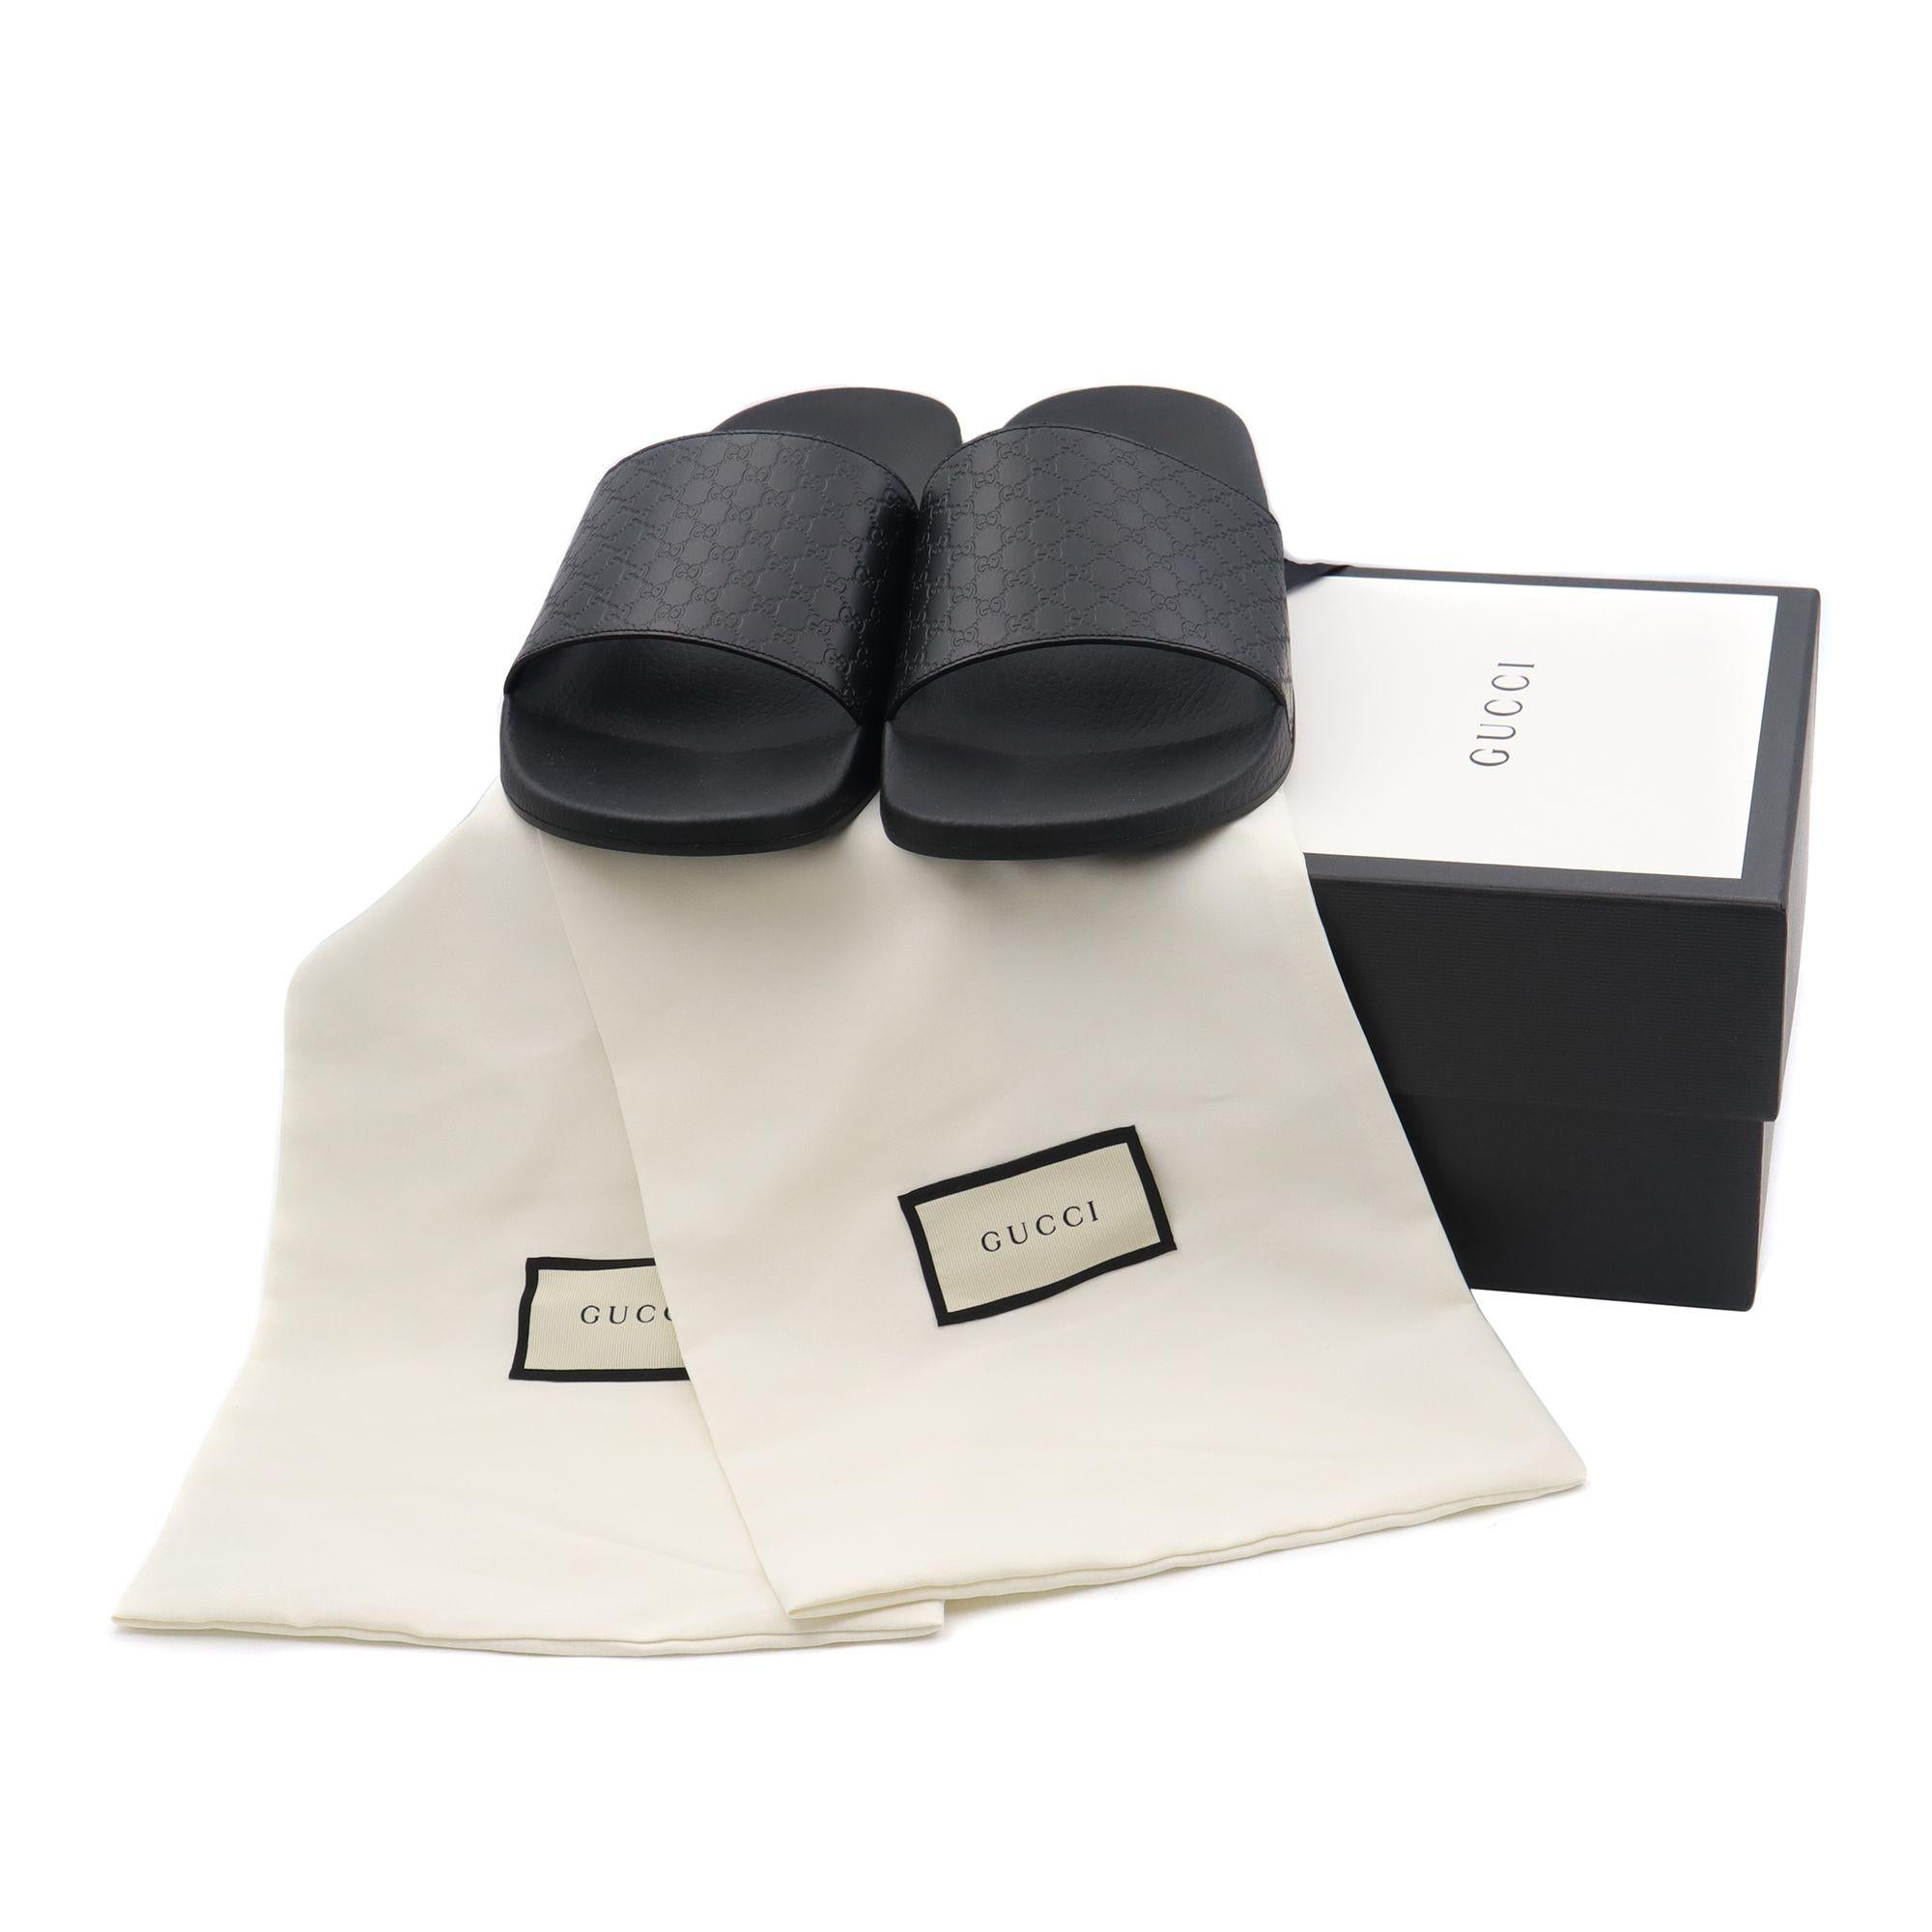 Gucci GG Logo Black Leather & Rubber Men's Sides Sandals Size 42 US 12 1